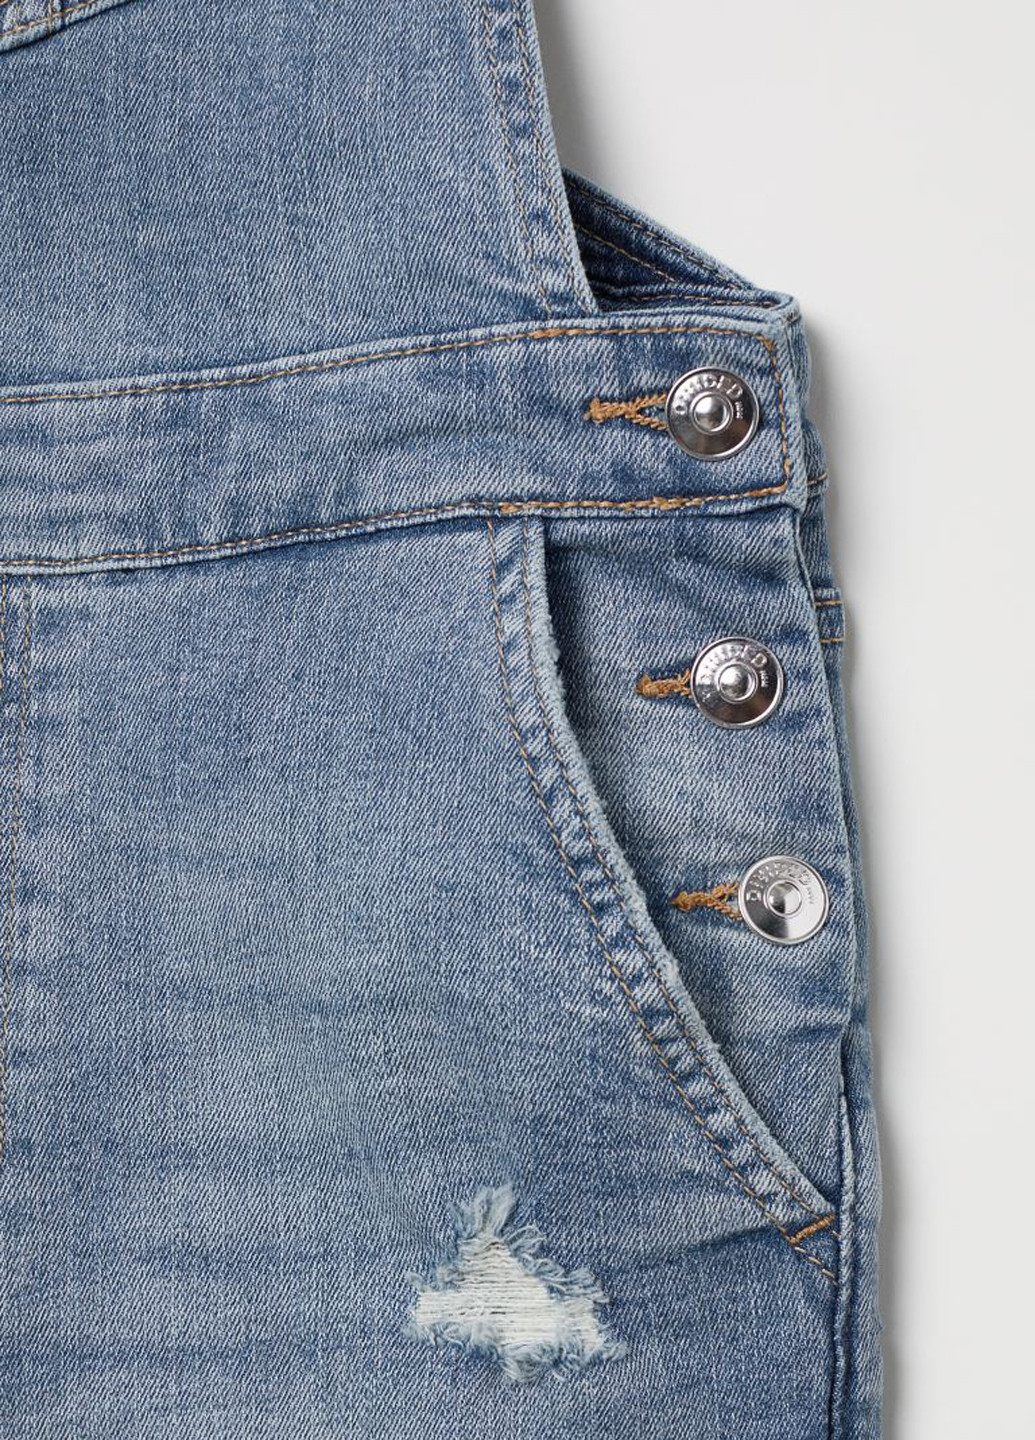 Комбинезон H&M комбинезон-брюки однотонный тёмно-голубой денил хлопок